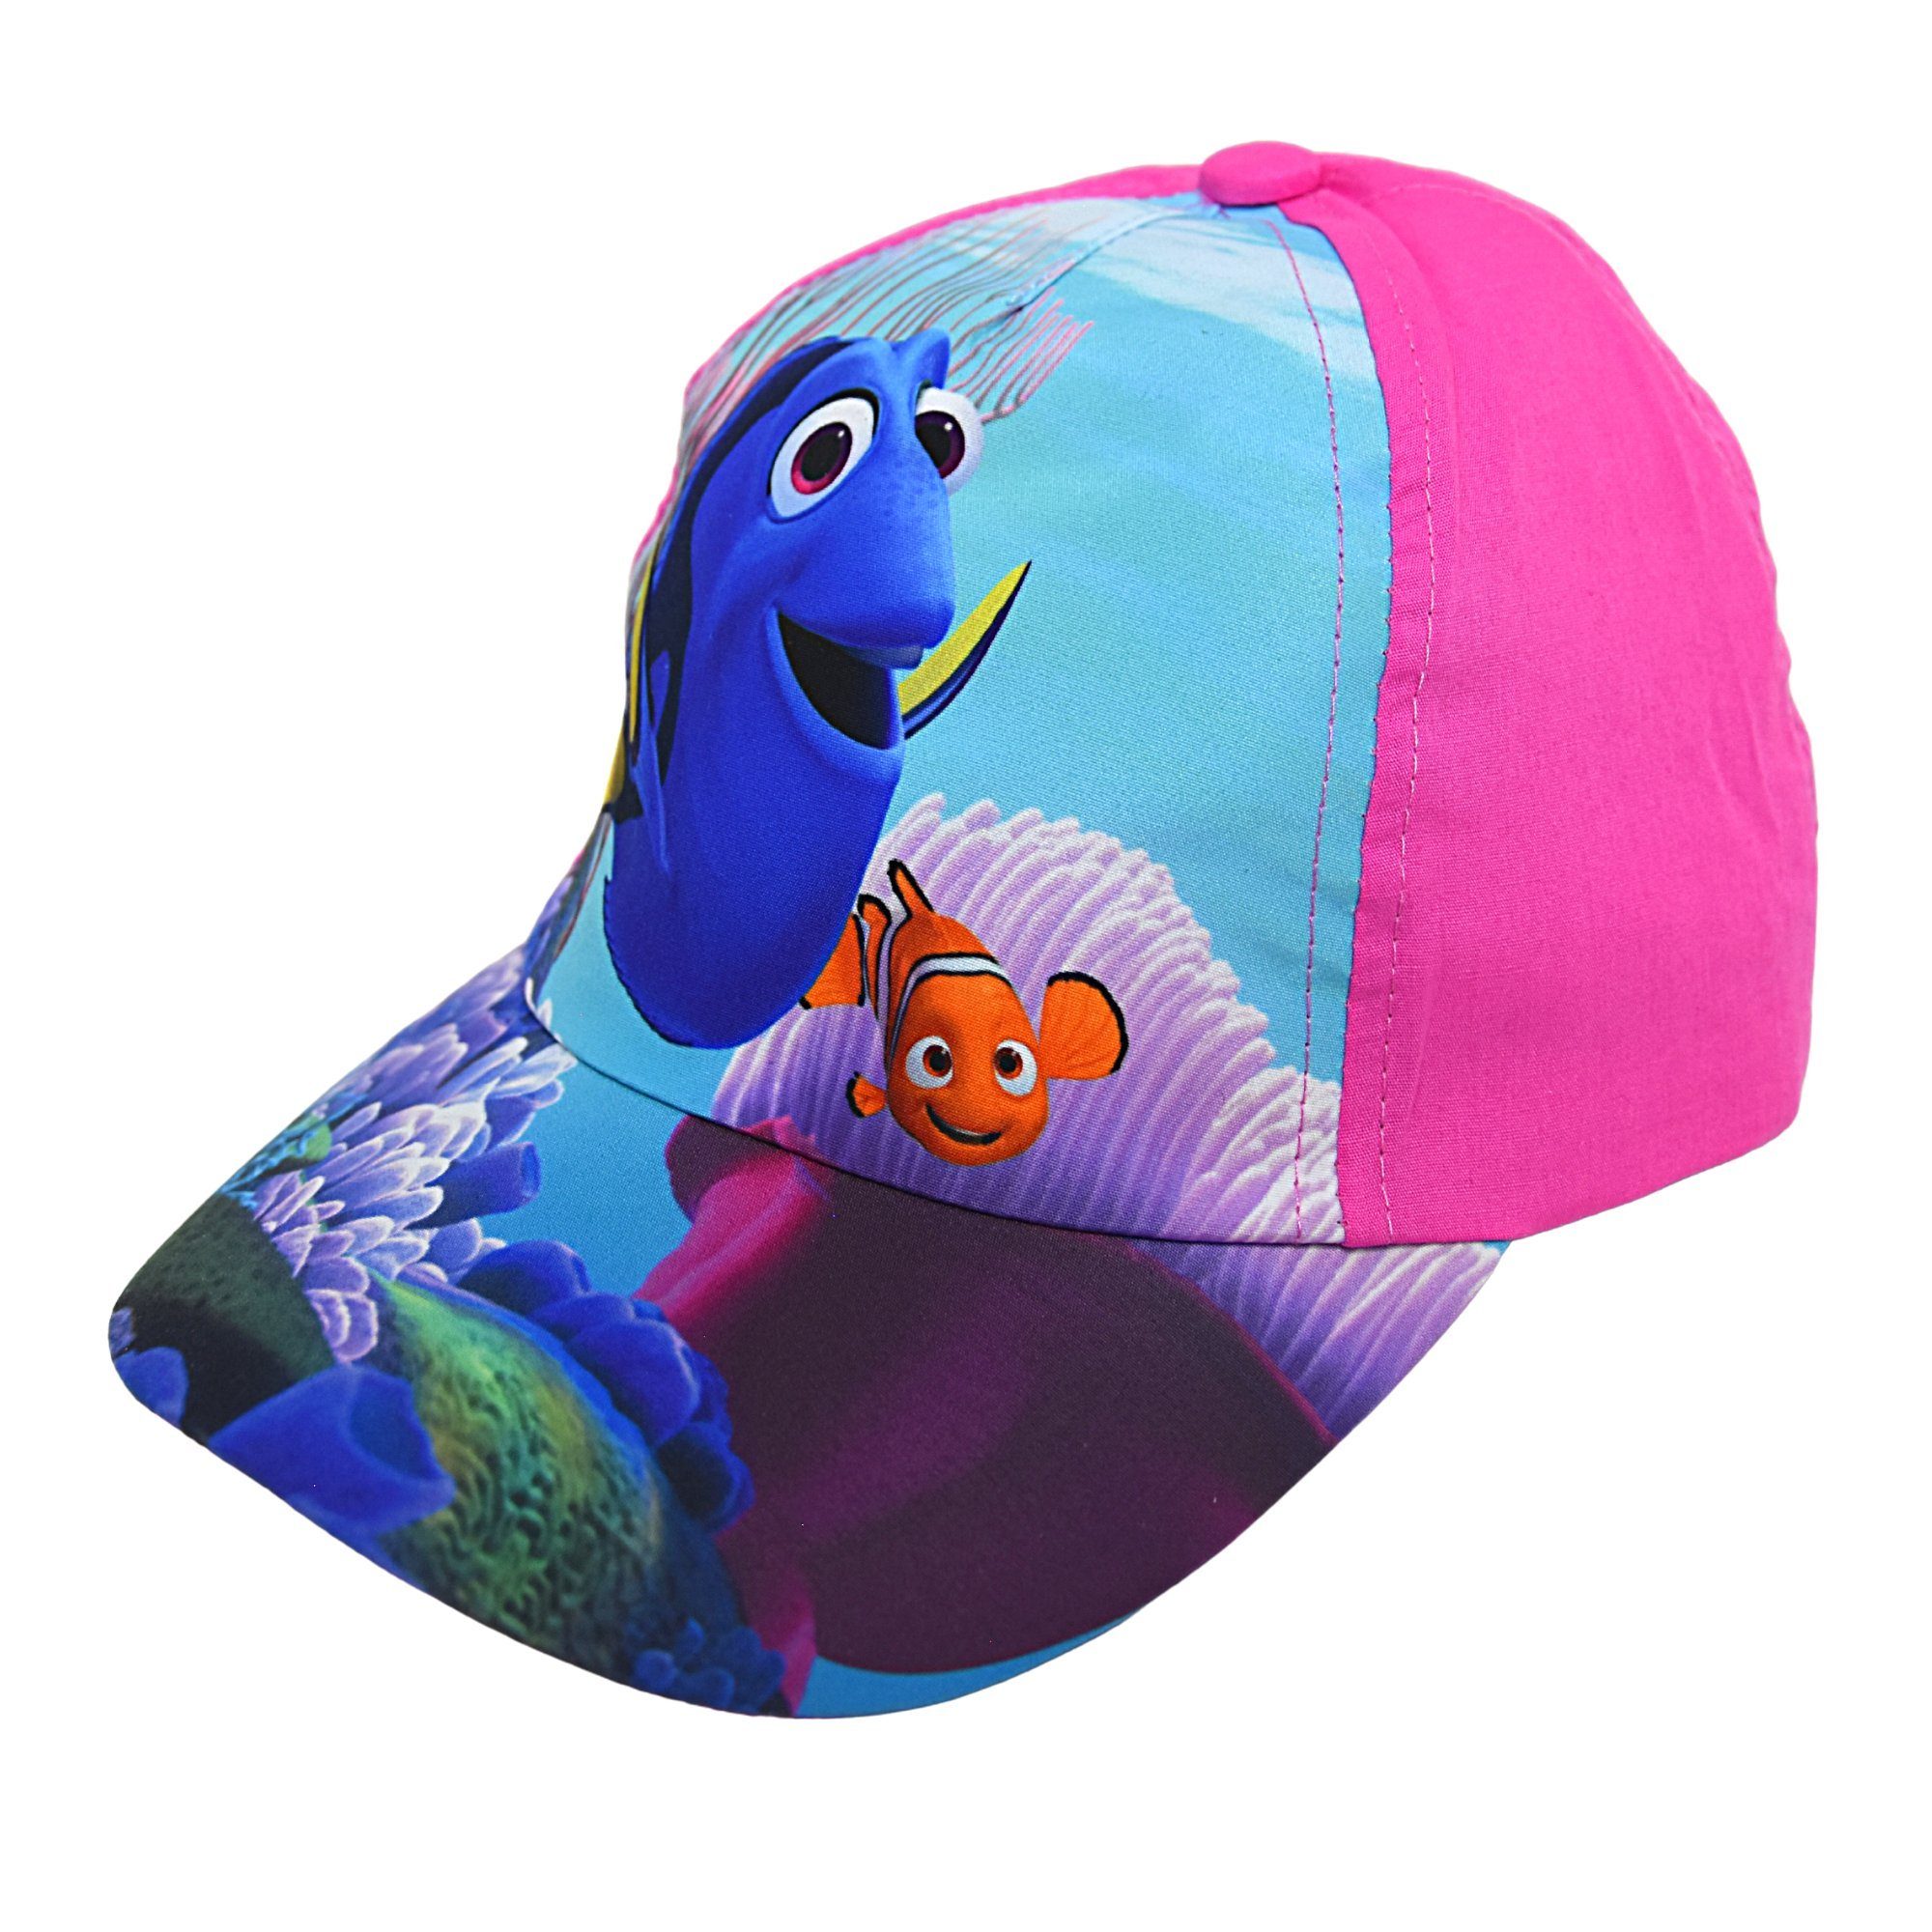 Dory Sommerkappe & Disney Baseball mit Schutz Größe UV 52-54 Nemo cm 30+ Cap Pink